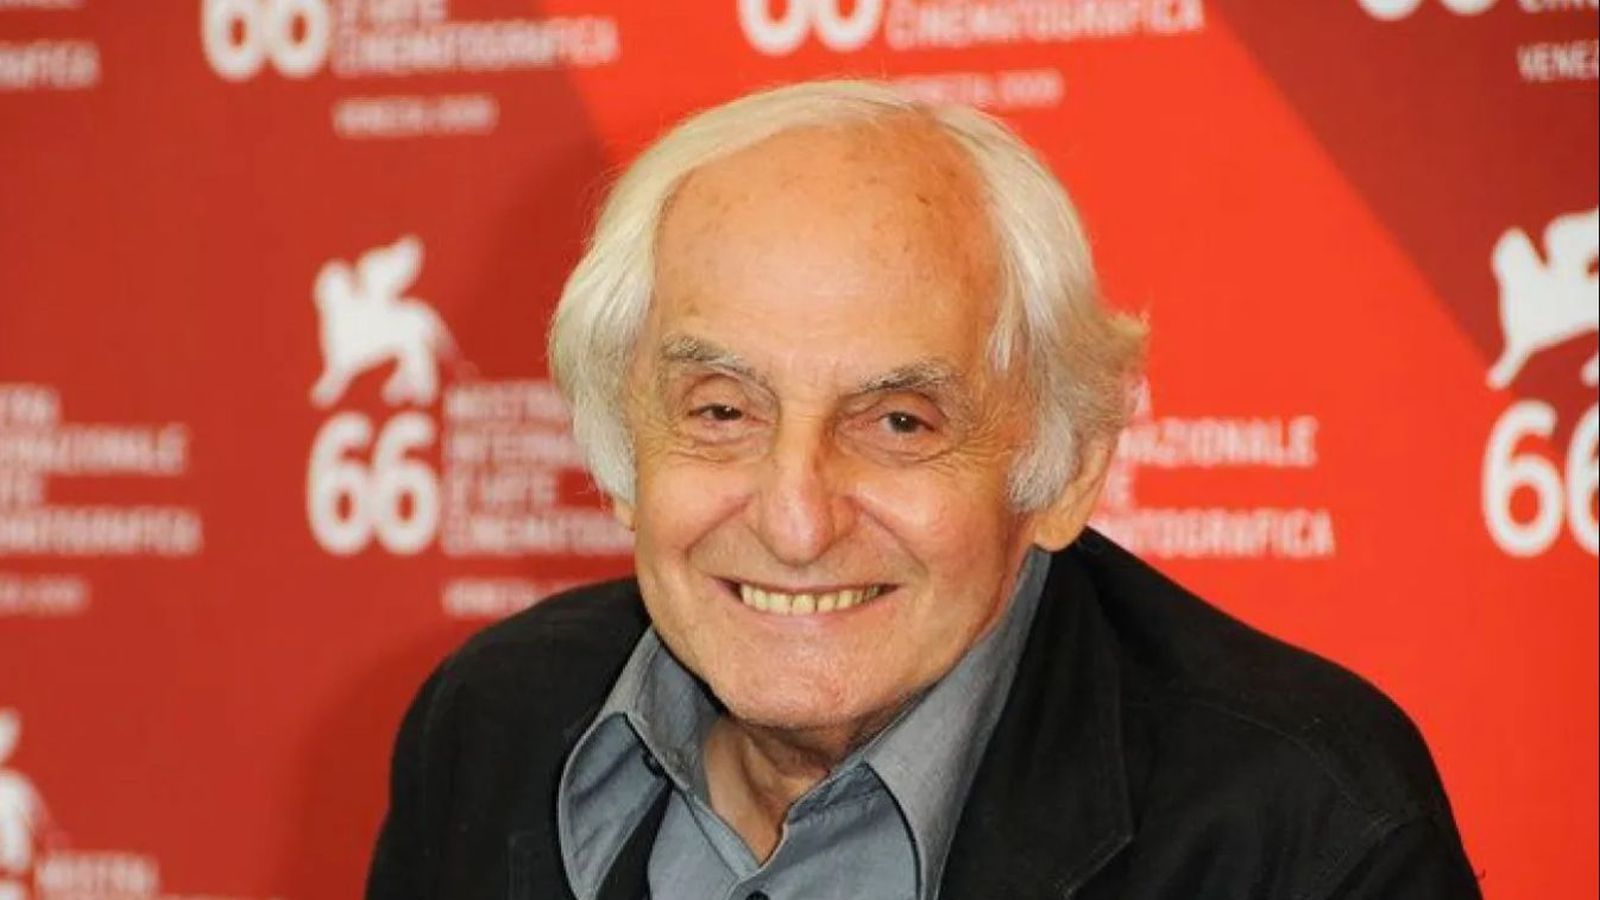 Citto Maselli, the director of Gli indifferenti dead at 93 years old